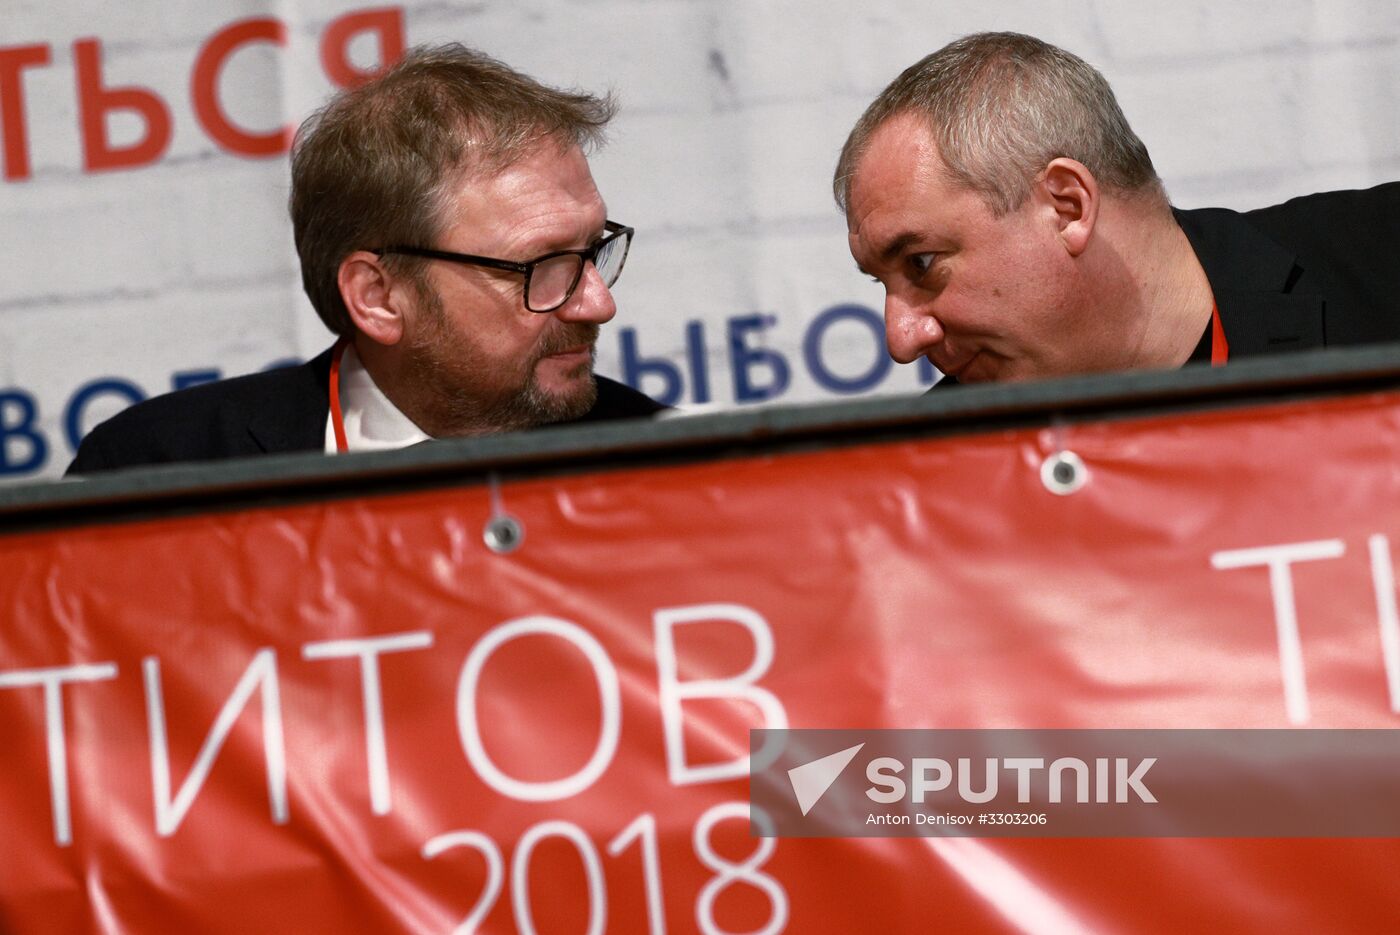 Boris Titov meets with his campaign supporters